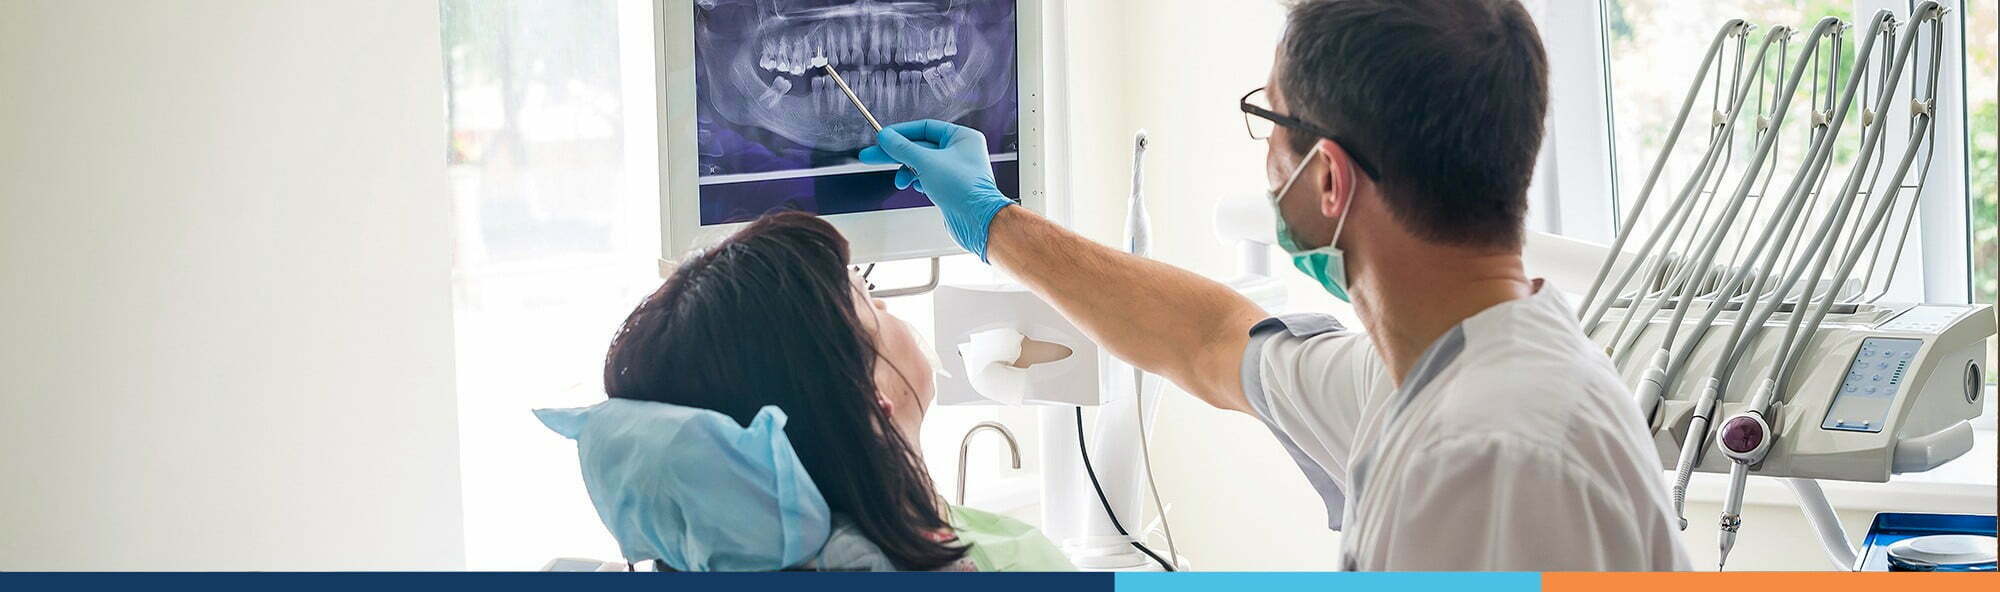 dental plans - dentist with xrays